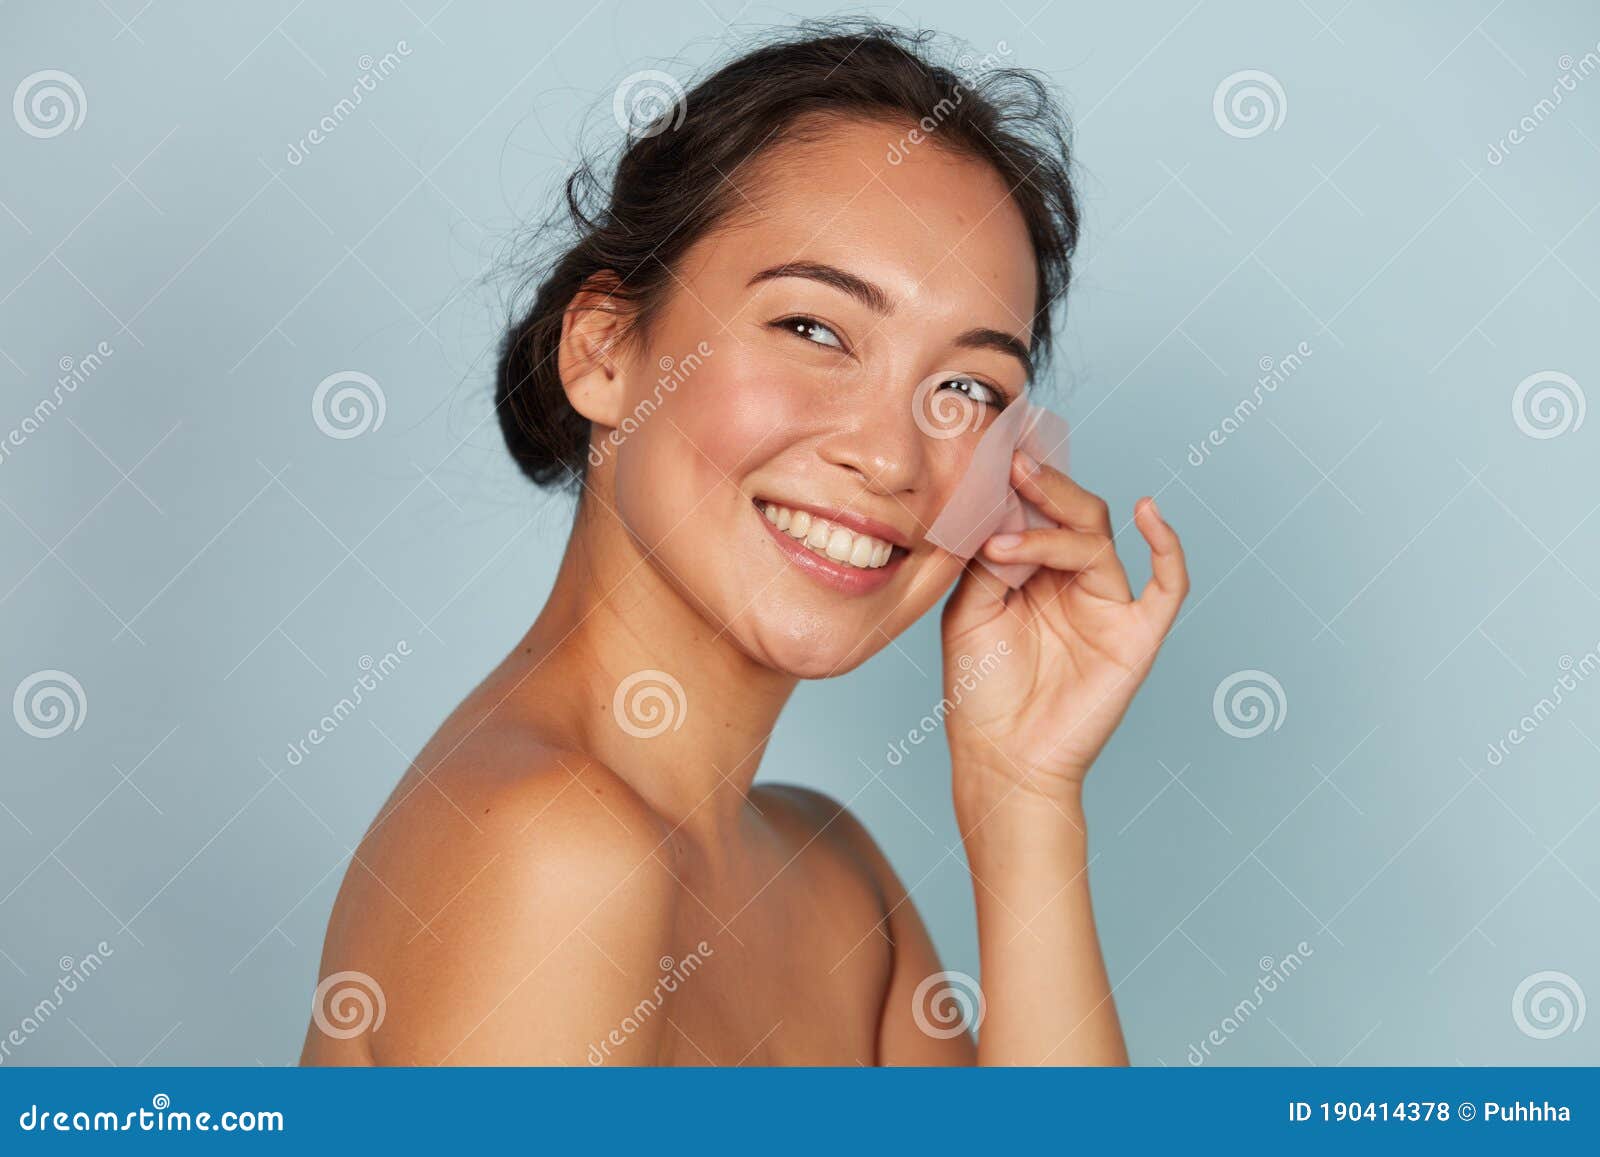 face skin care. smiling woman using oil blotting paper portrait